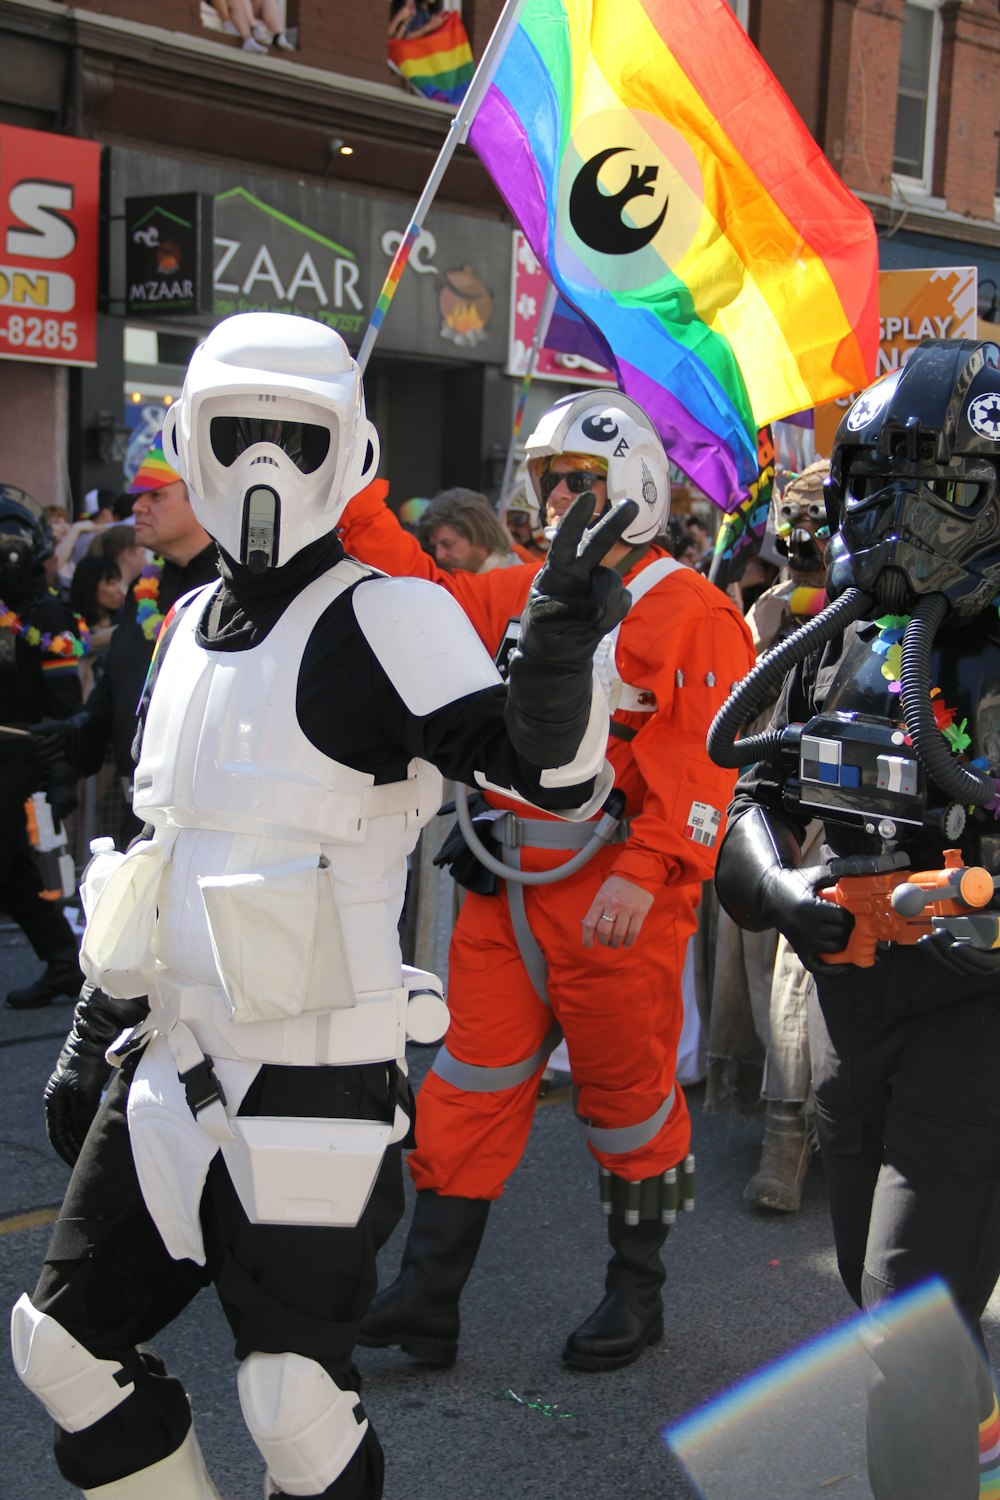 Star Wars Trooper costume